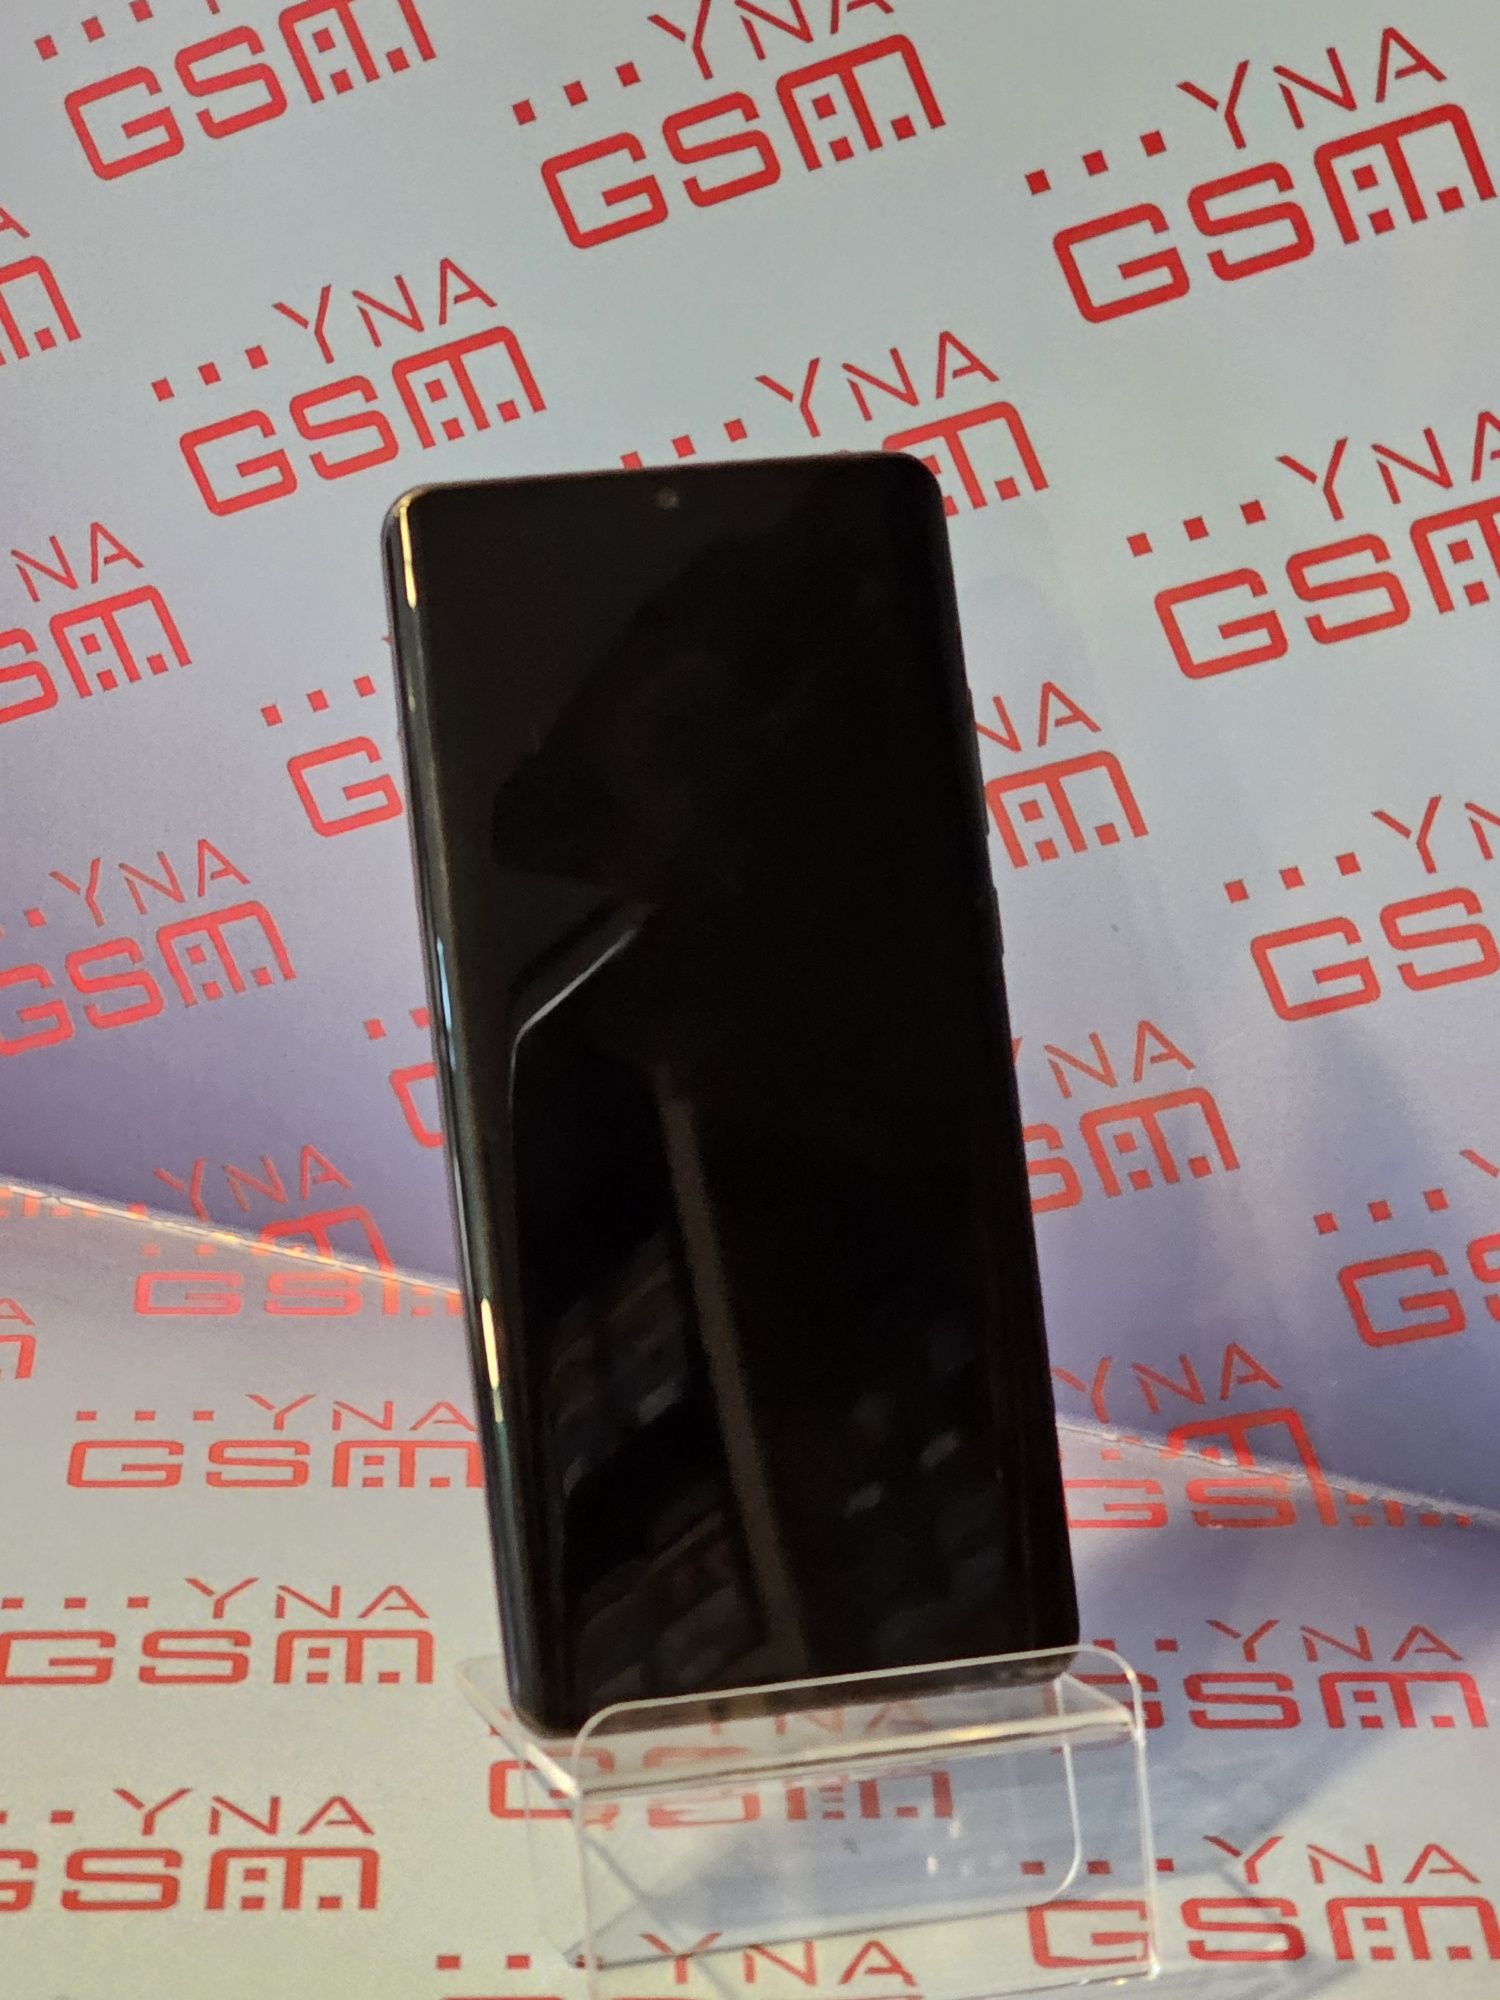 Huawei P30 Pro - Consignatia Yna Gsm Craiova